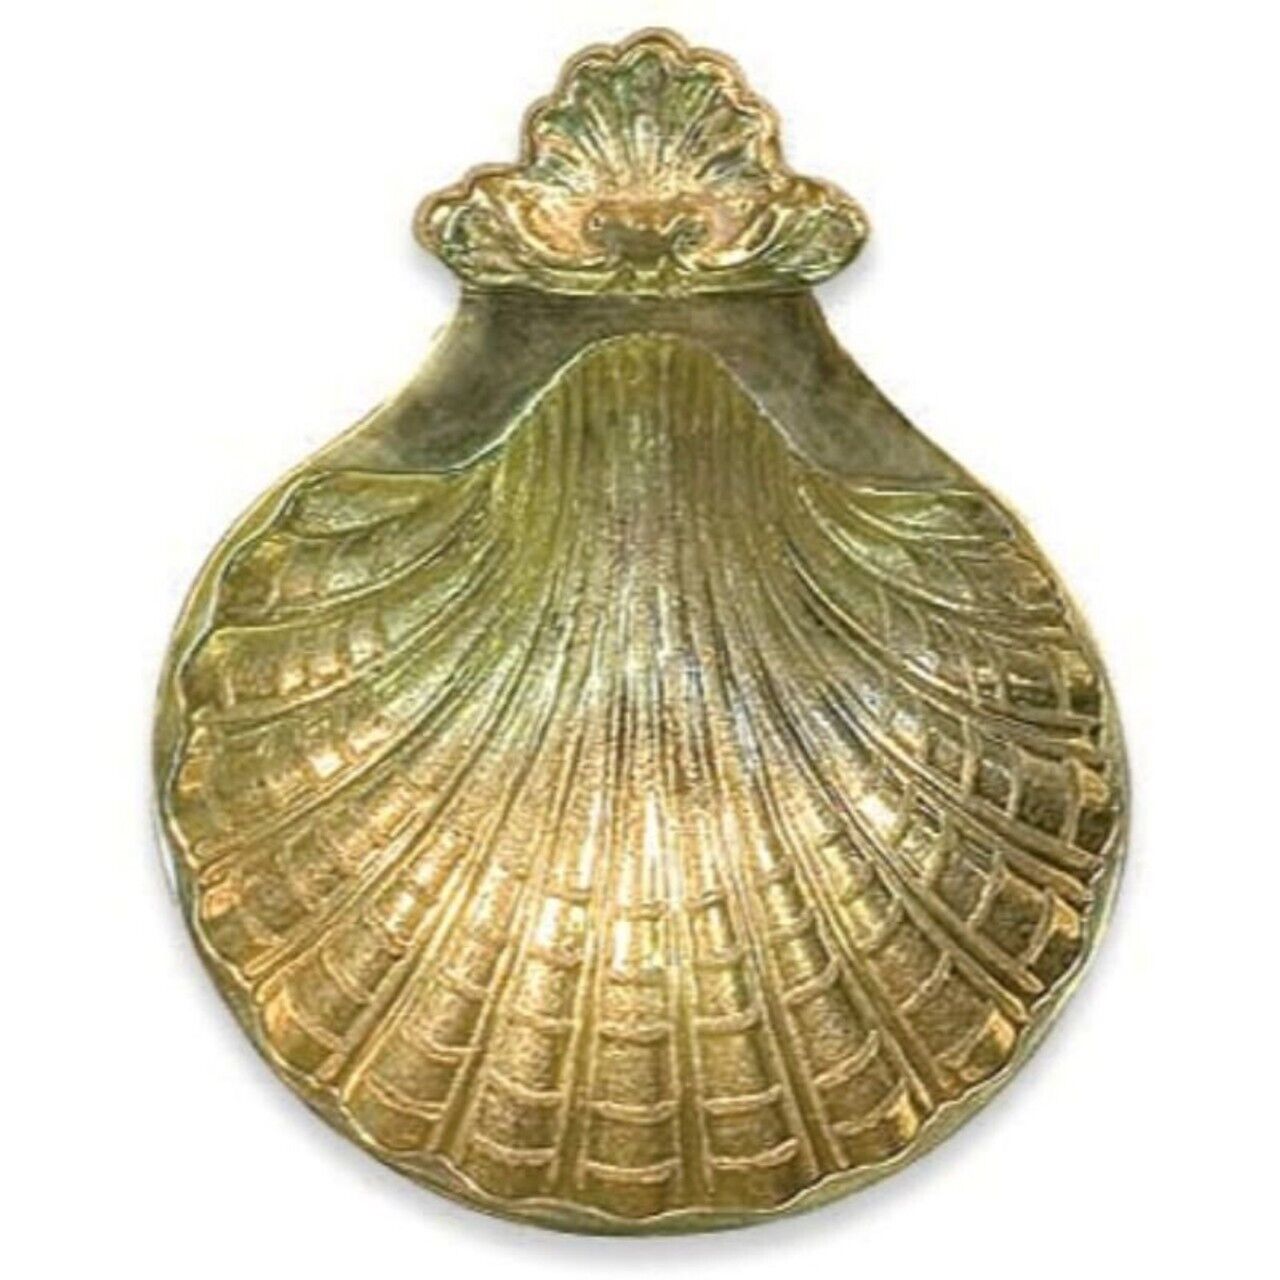 Ornate Brass Baptismal Shell Vessel for Ceremonies Gift For Churches 5 1/2 In